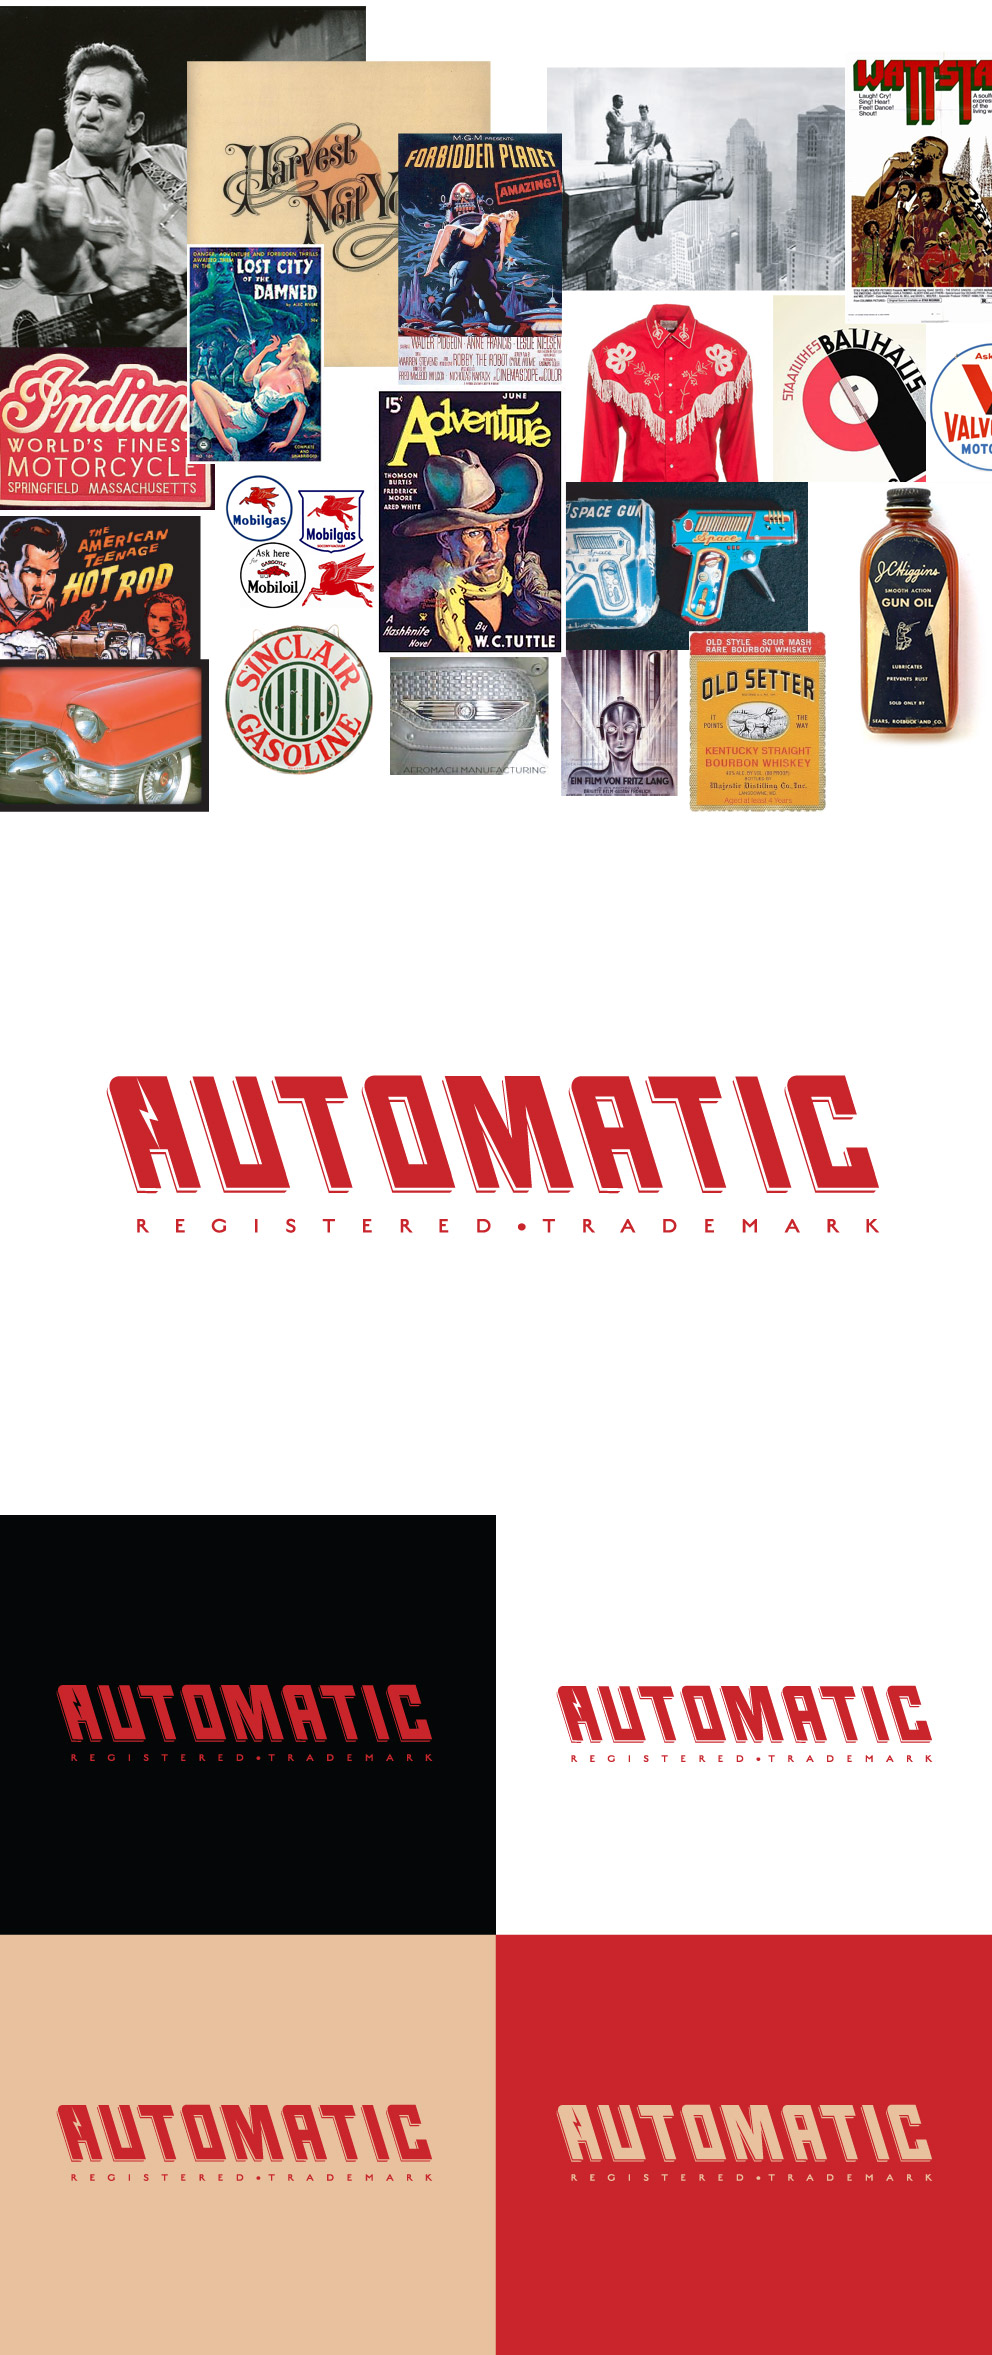 Automatic branding work